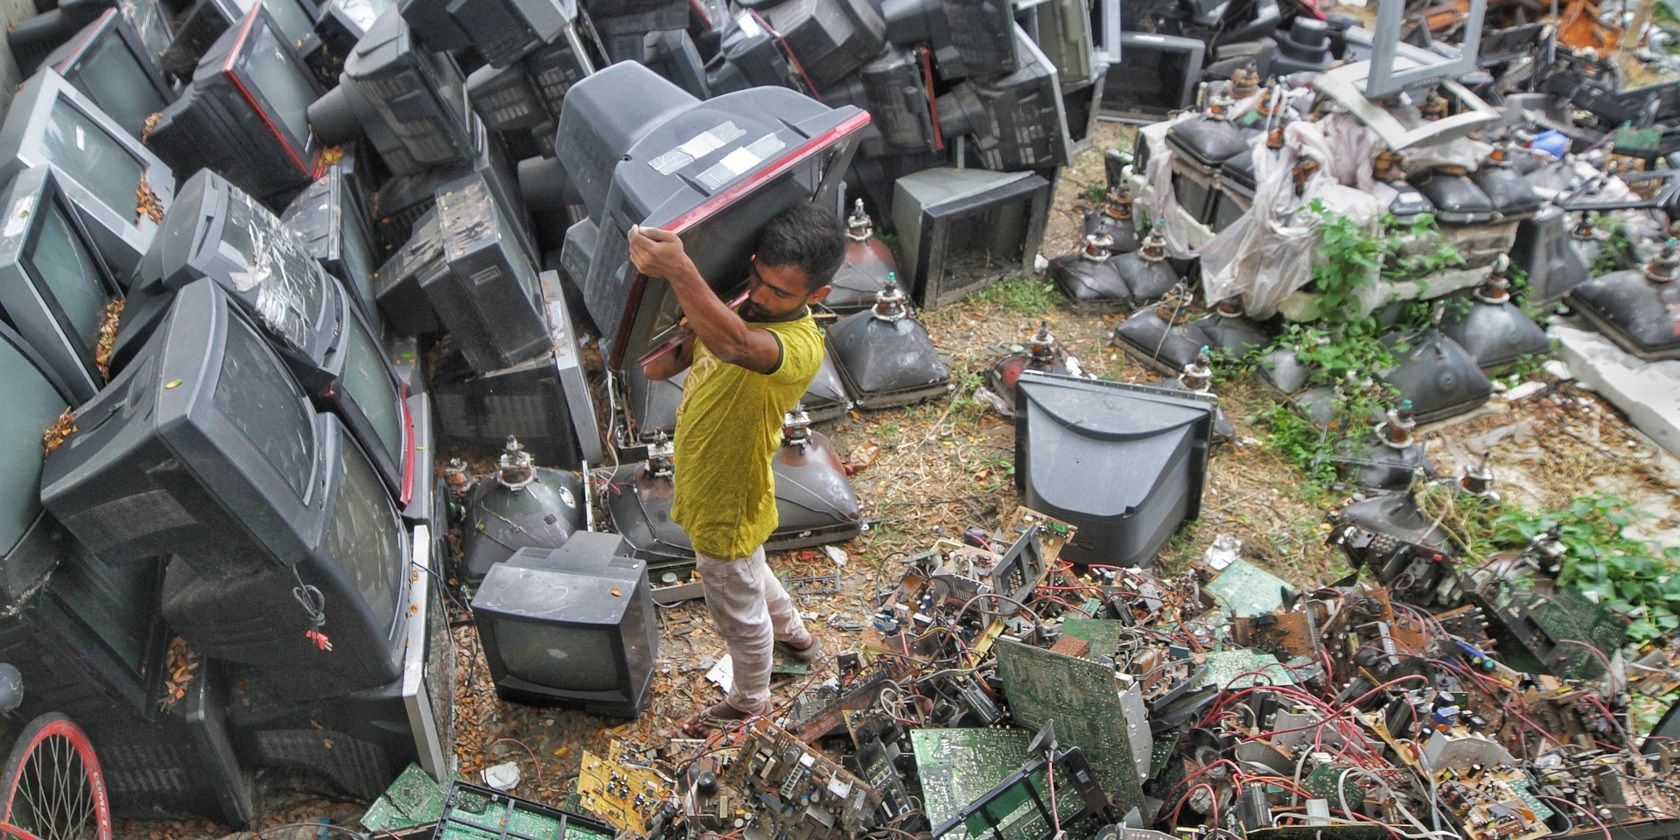 Man lifting an old TV in an e-waste dumpsite